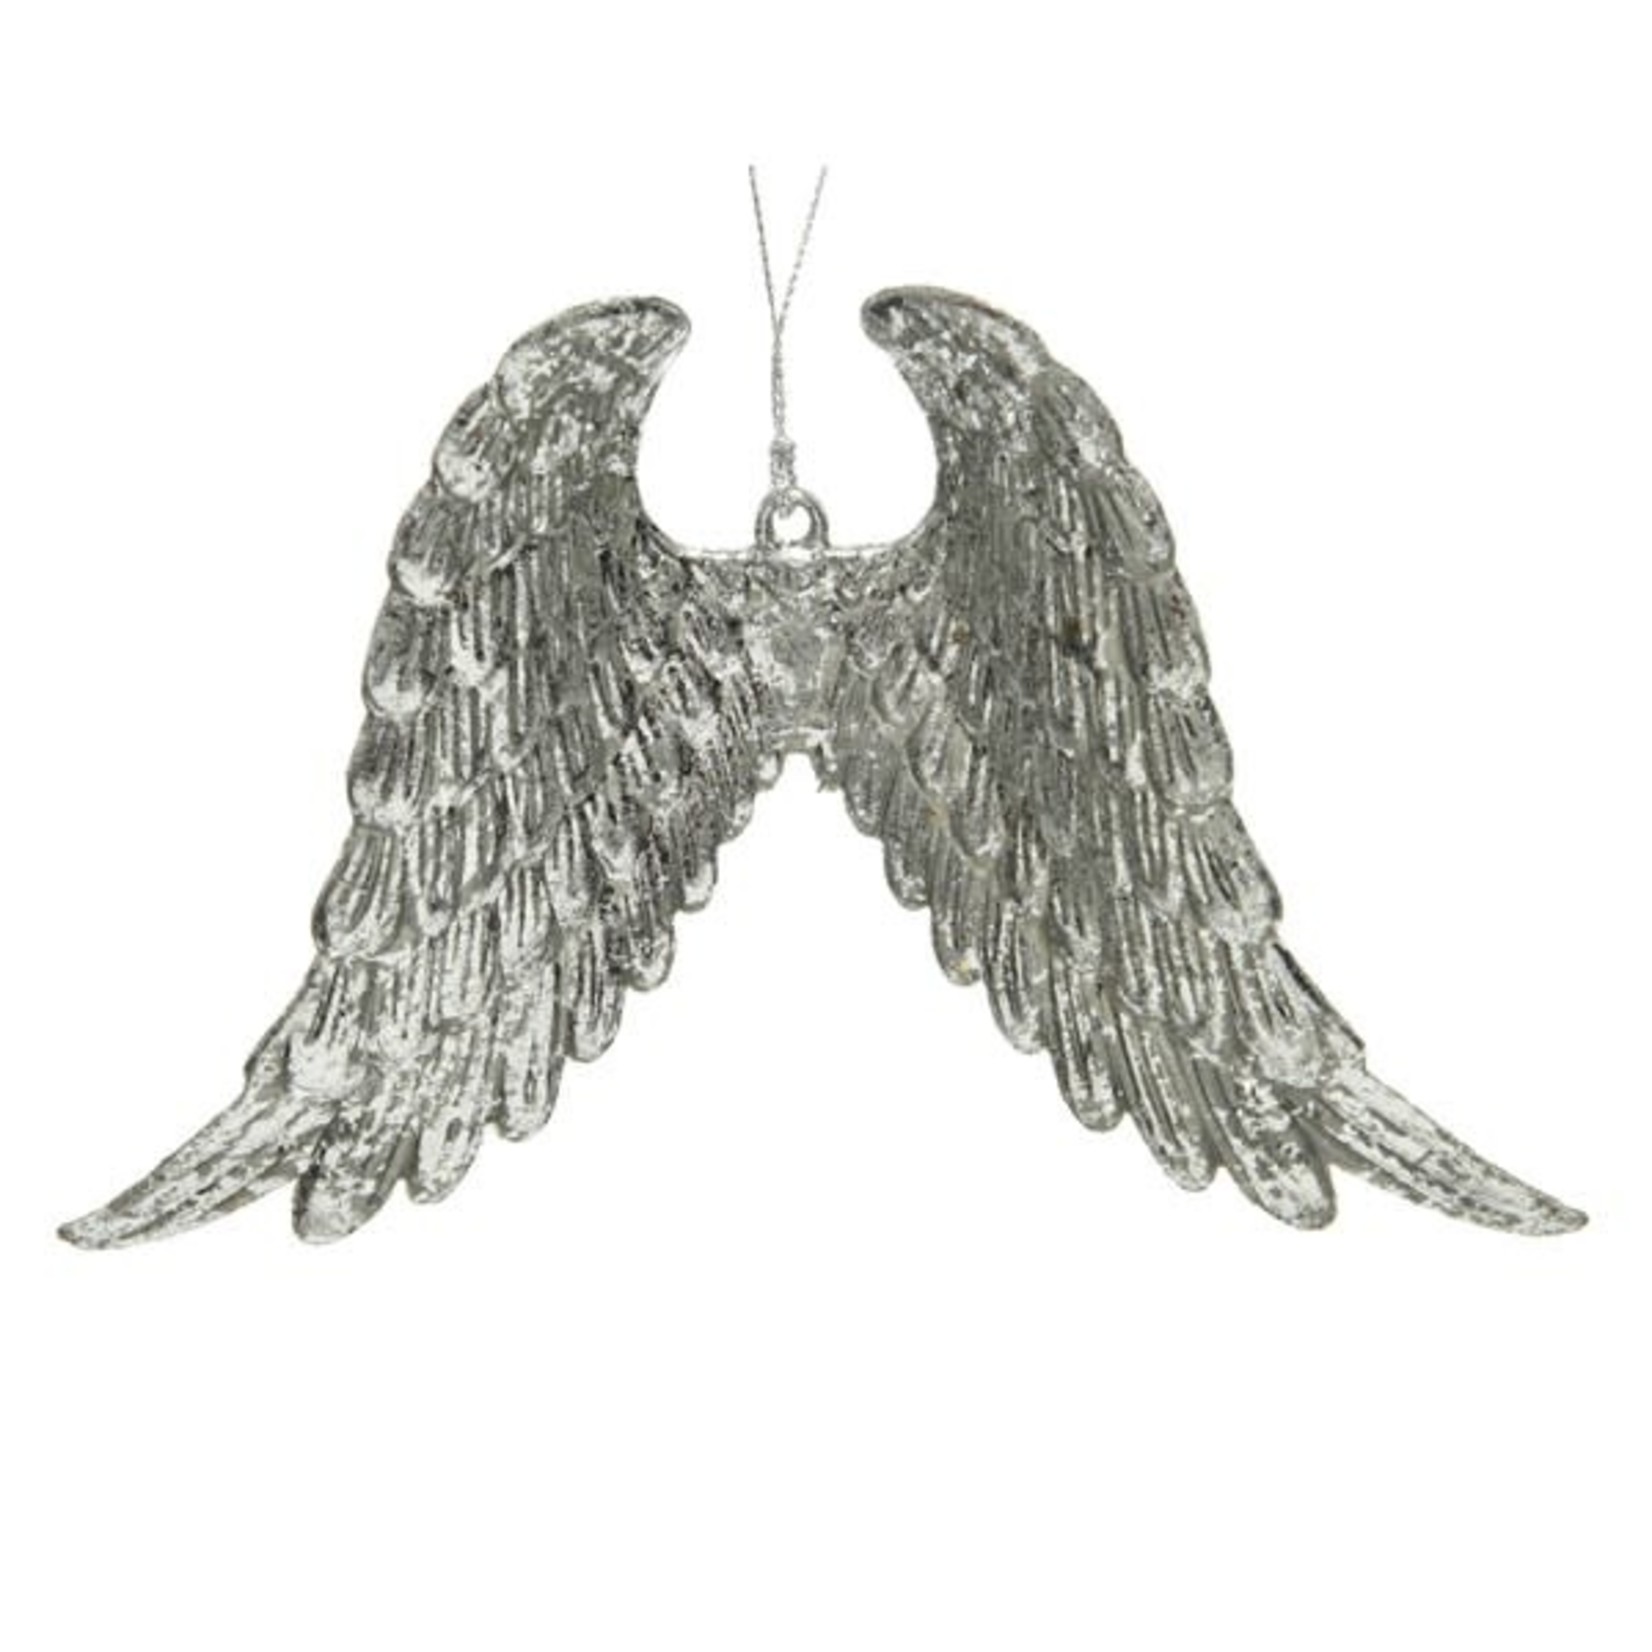 Wings plastic antique silver rustic 2x16x10cm